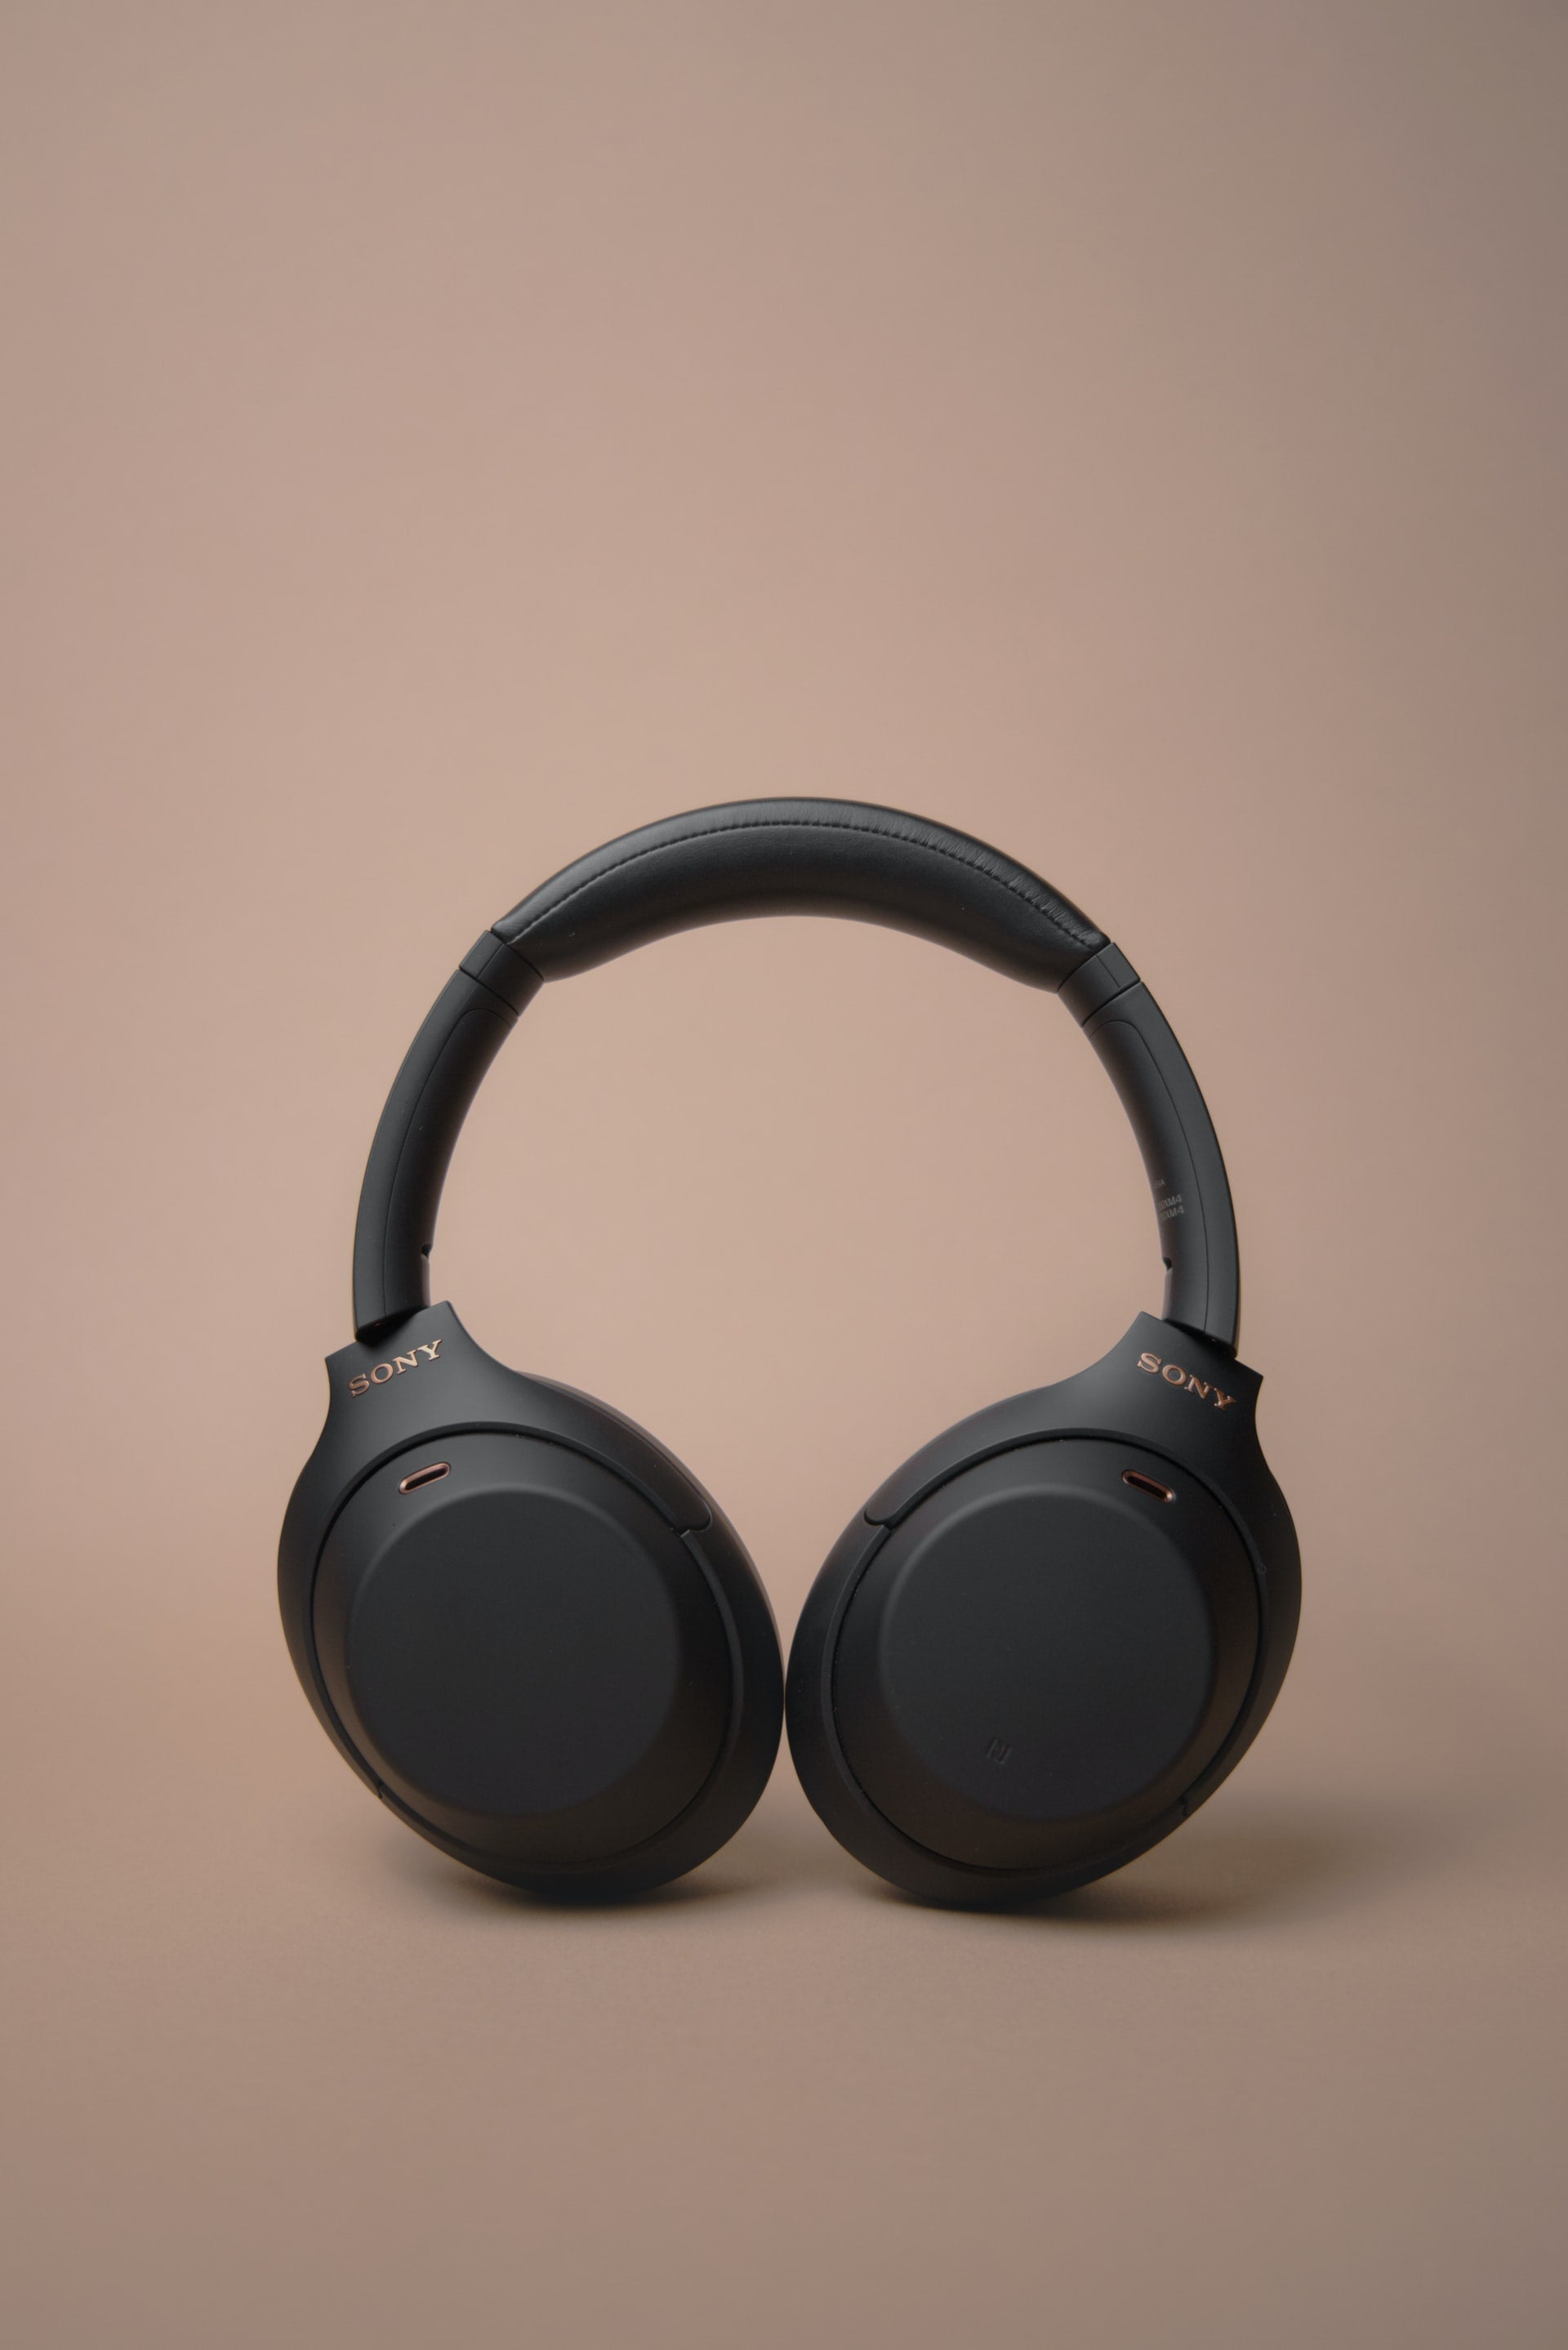 Black noise cancelling headphones